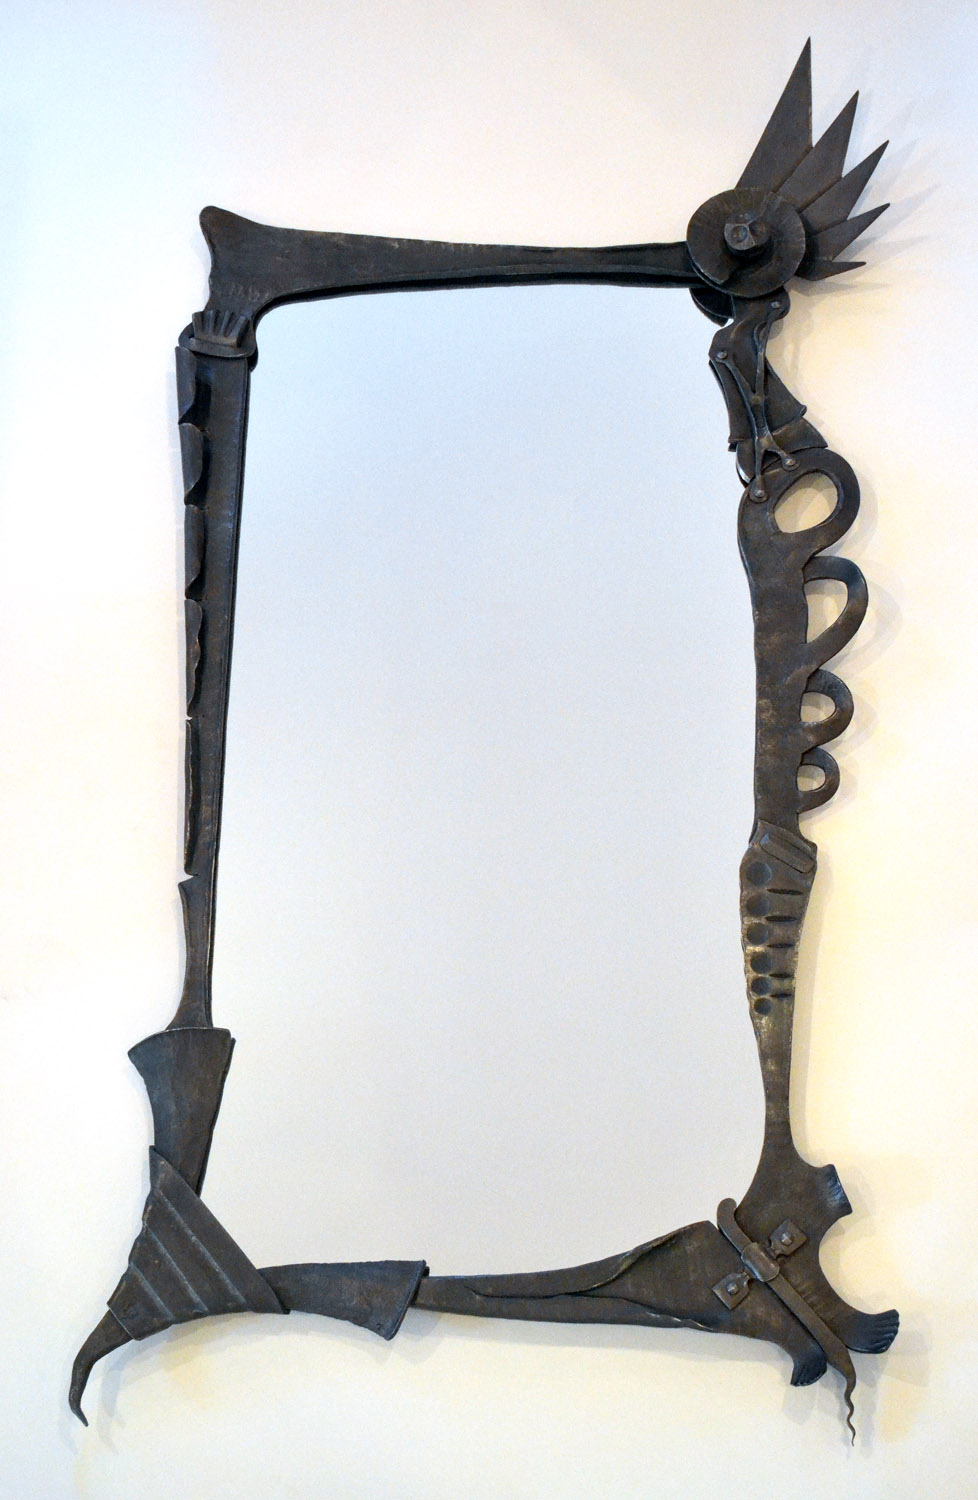  mirror frame for Artfully Insane Tattoo Parlour, steel, mirror, 2013 